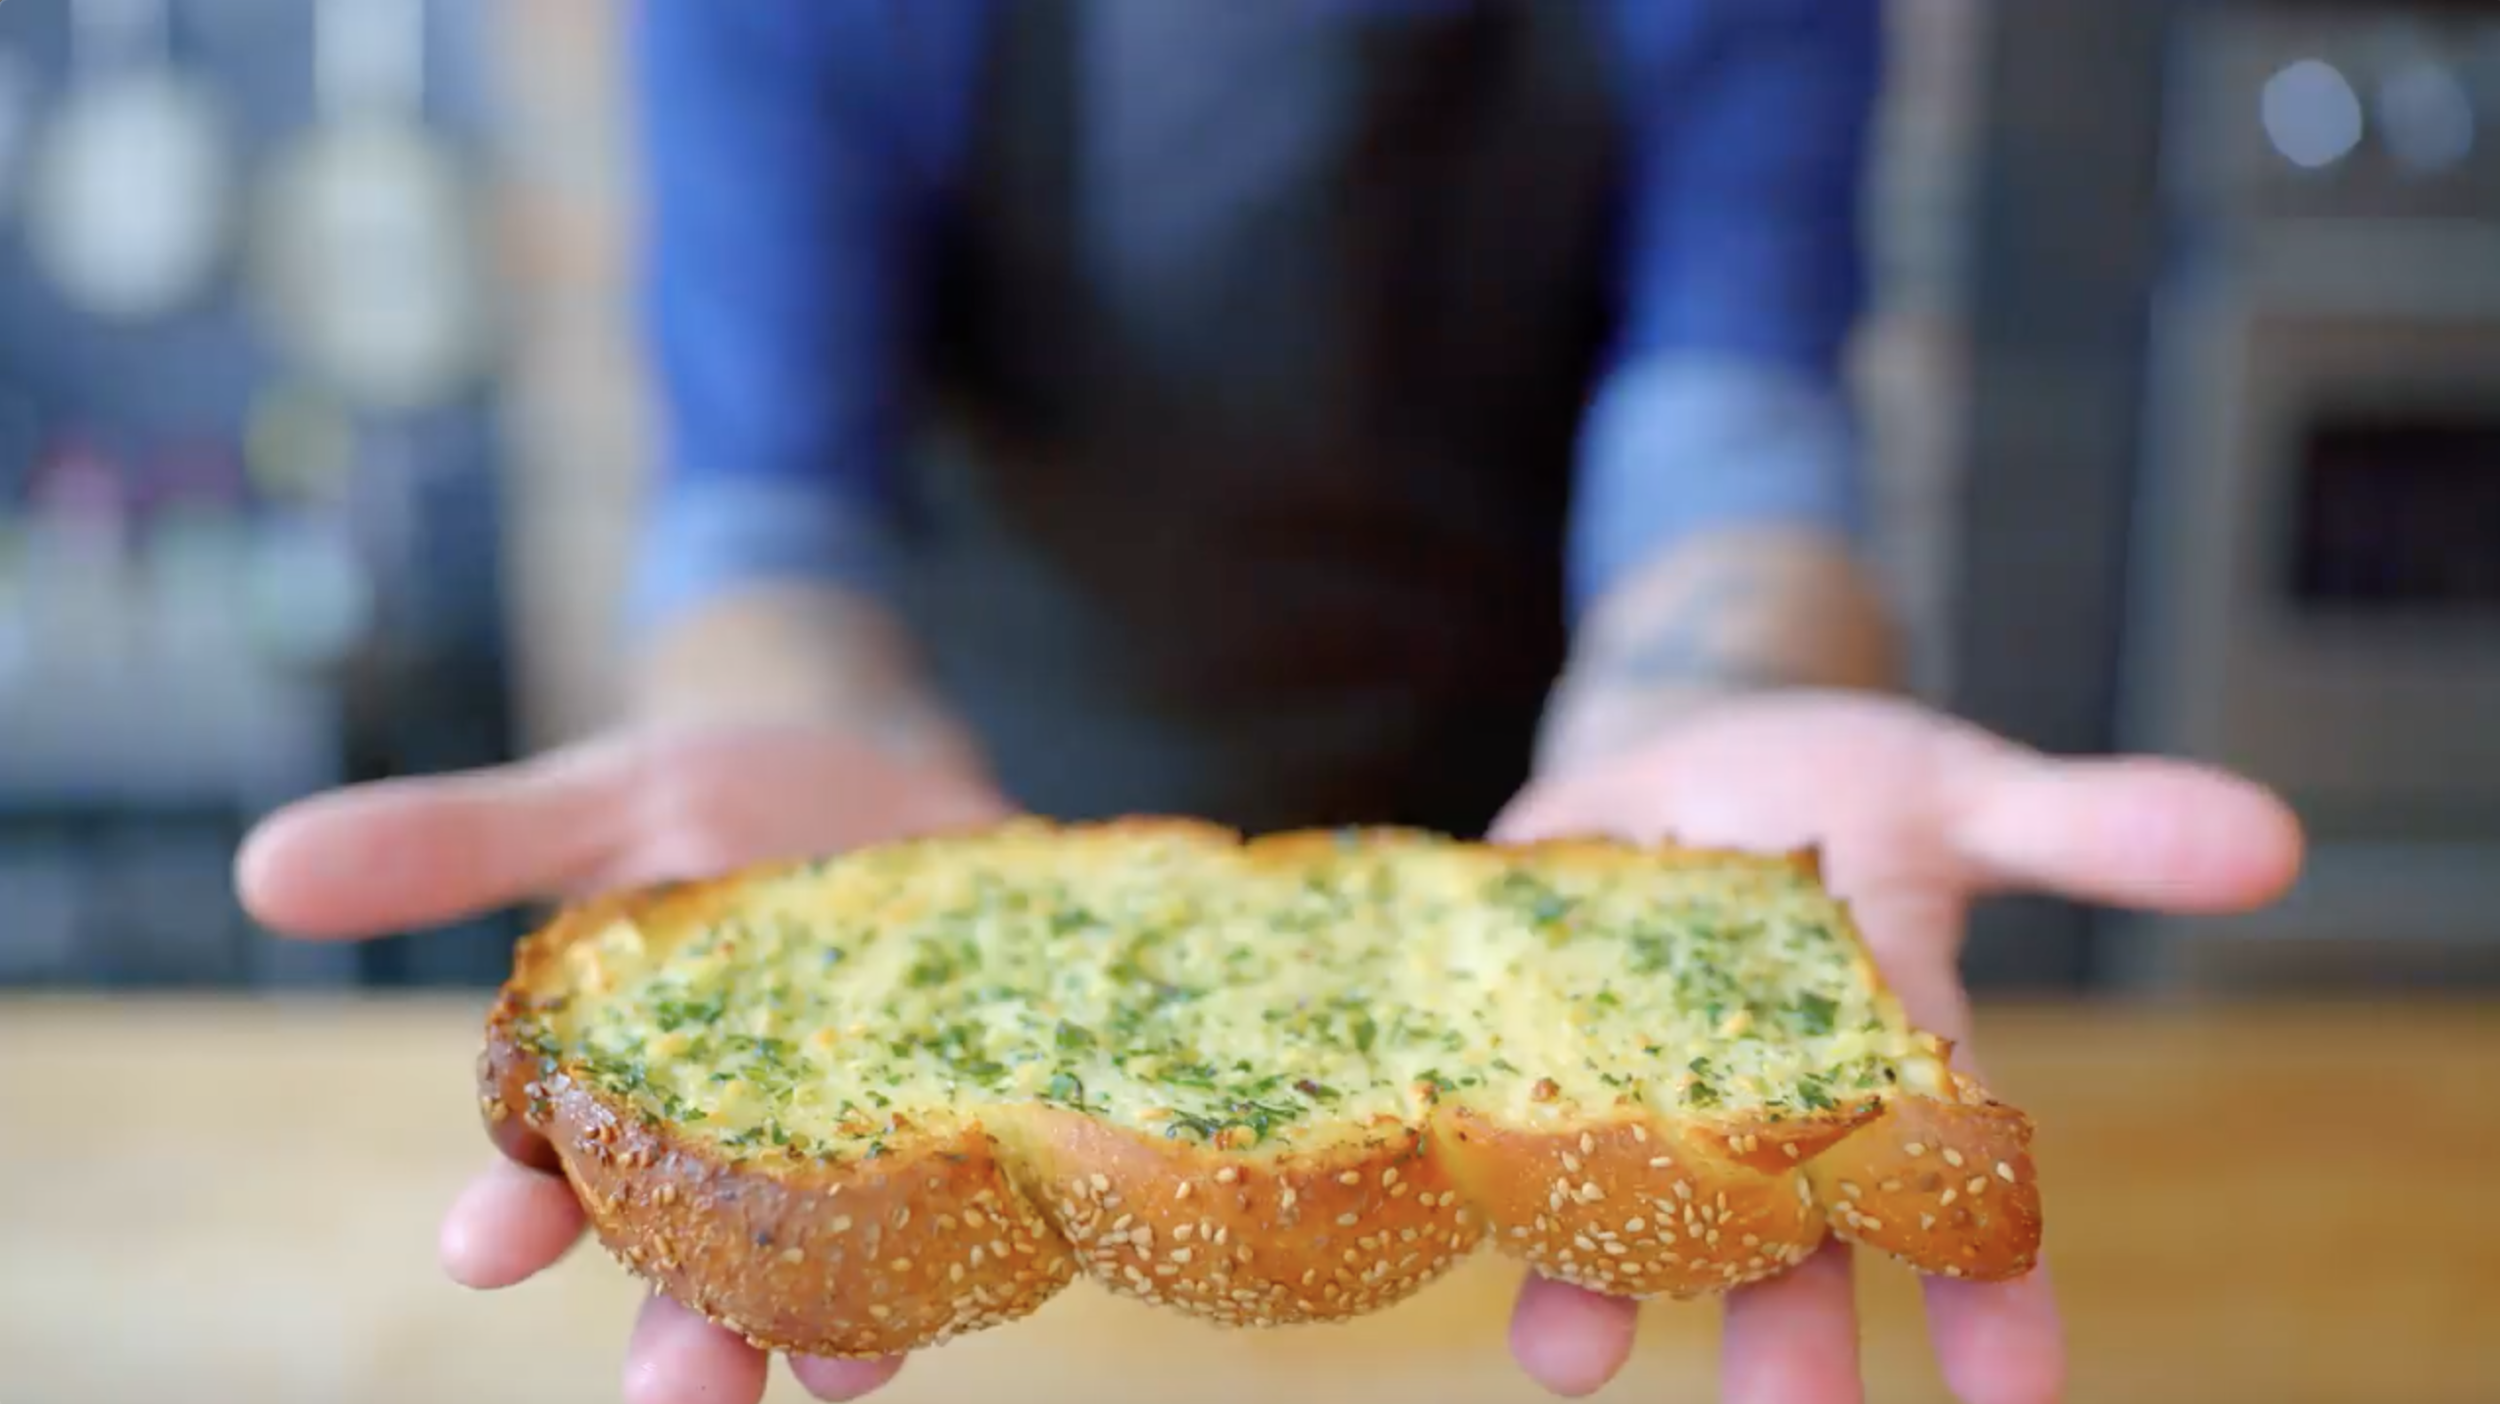 Picture for Garlic Bread inspired by Scott Pilgrim vs the World